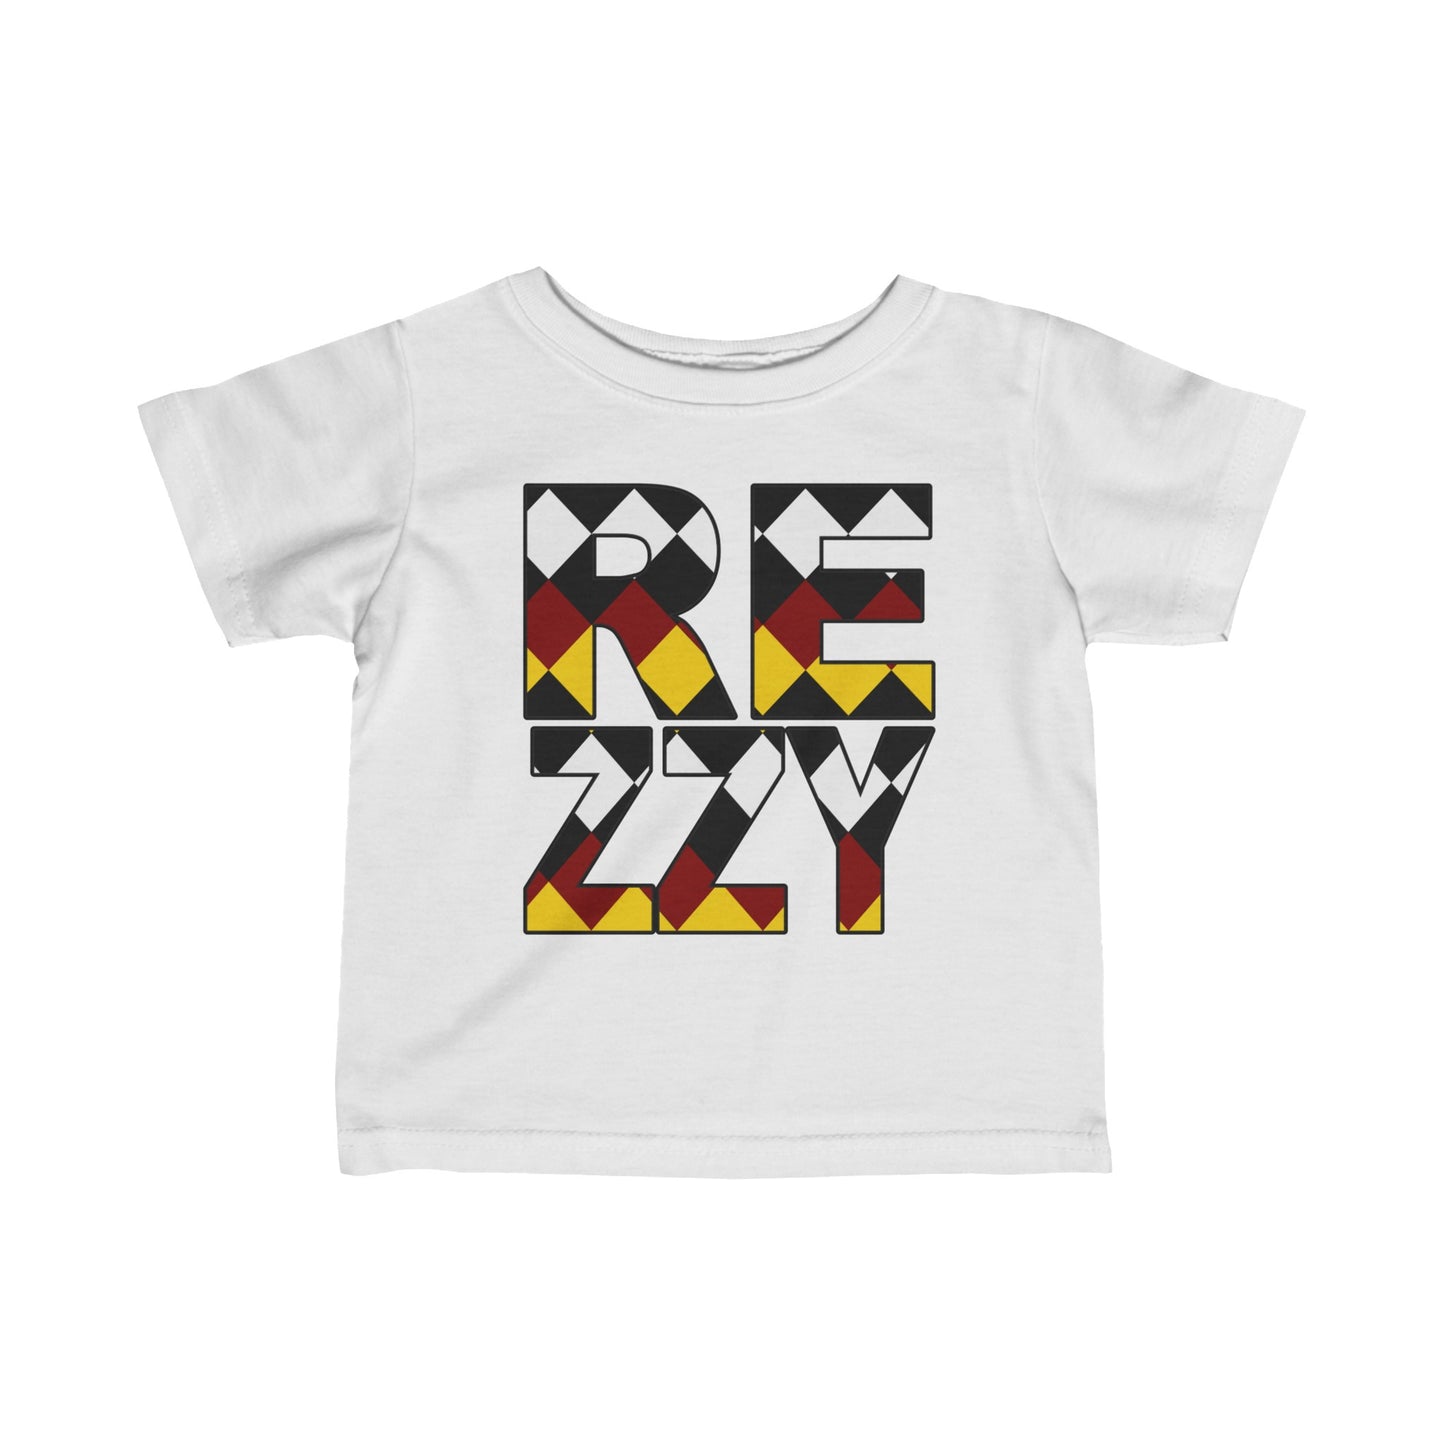 Toddler Rezzy T-shirt